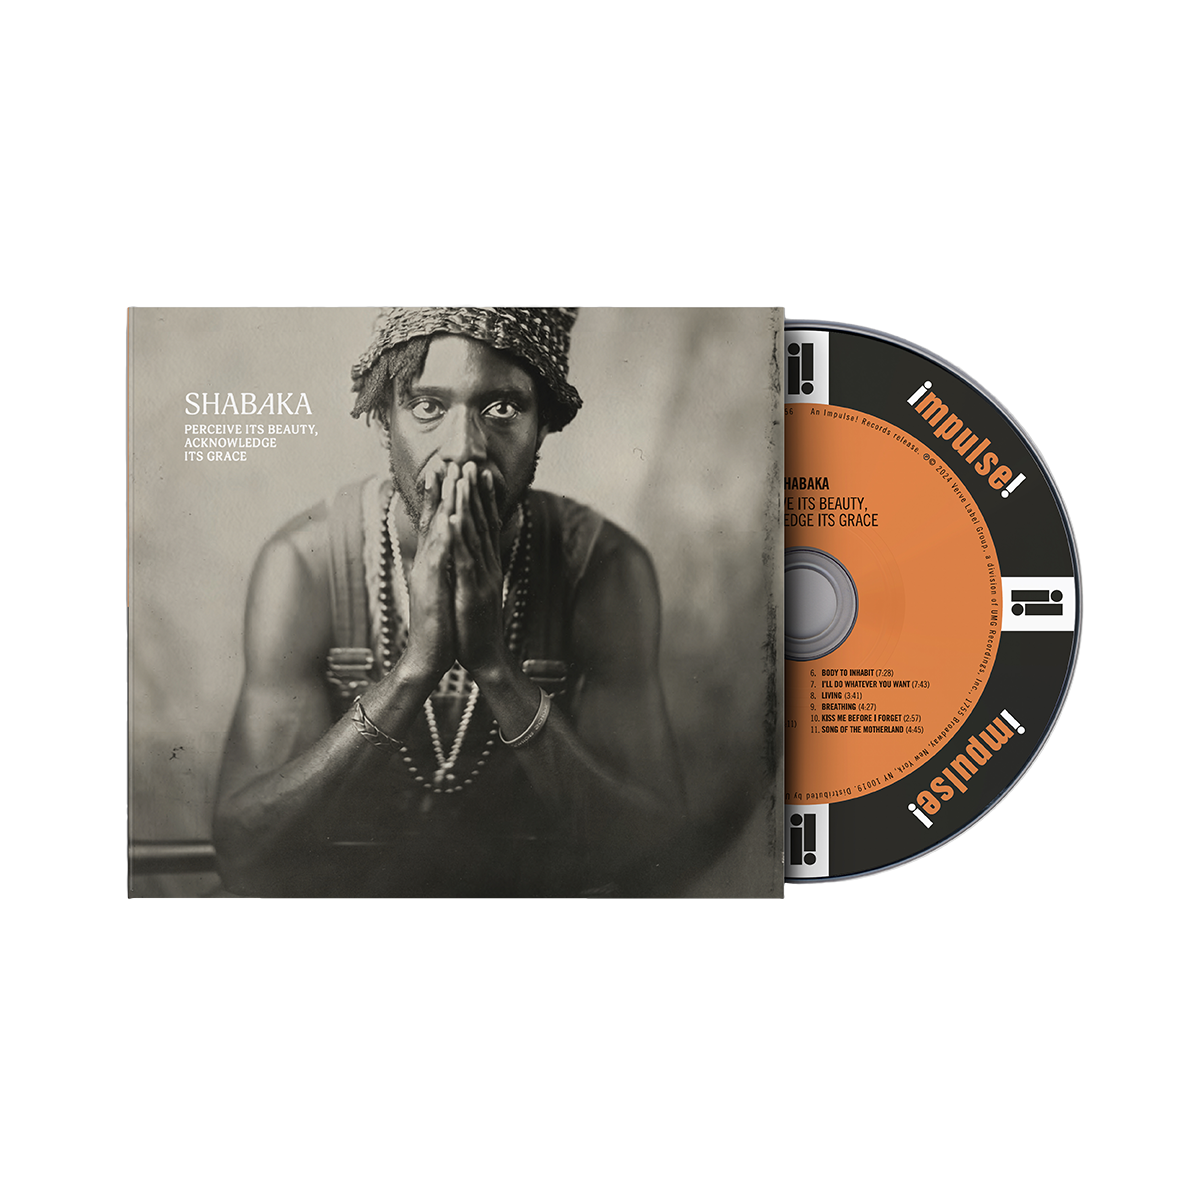 Shabaka - Perceive its Beauty, Acknowledge its Grace: CD